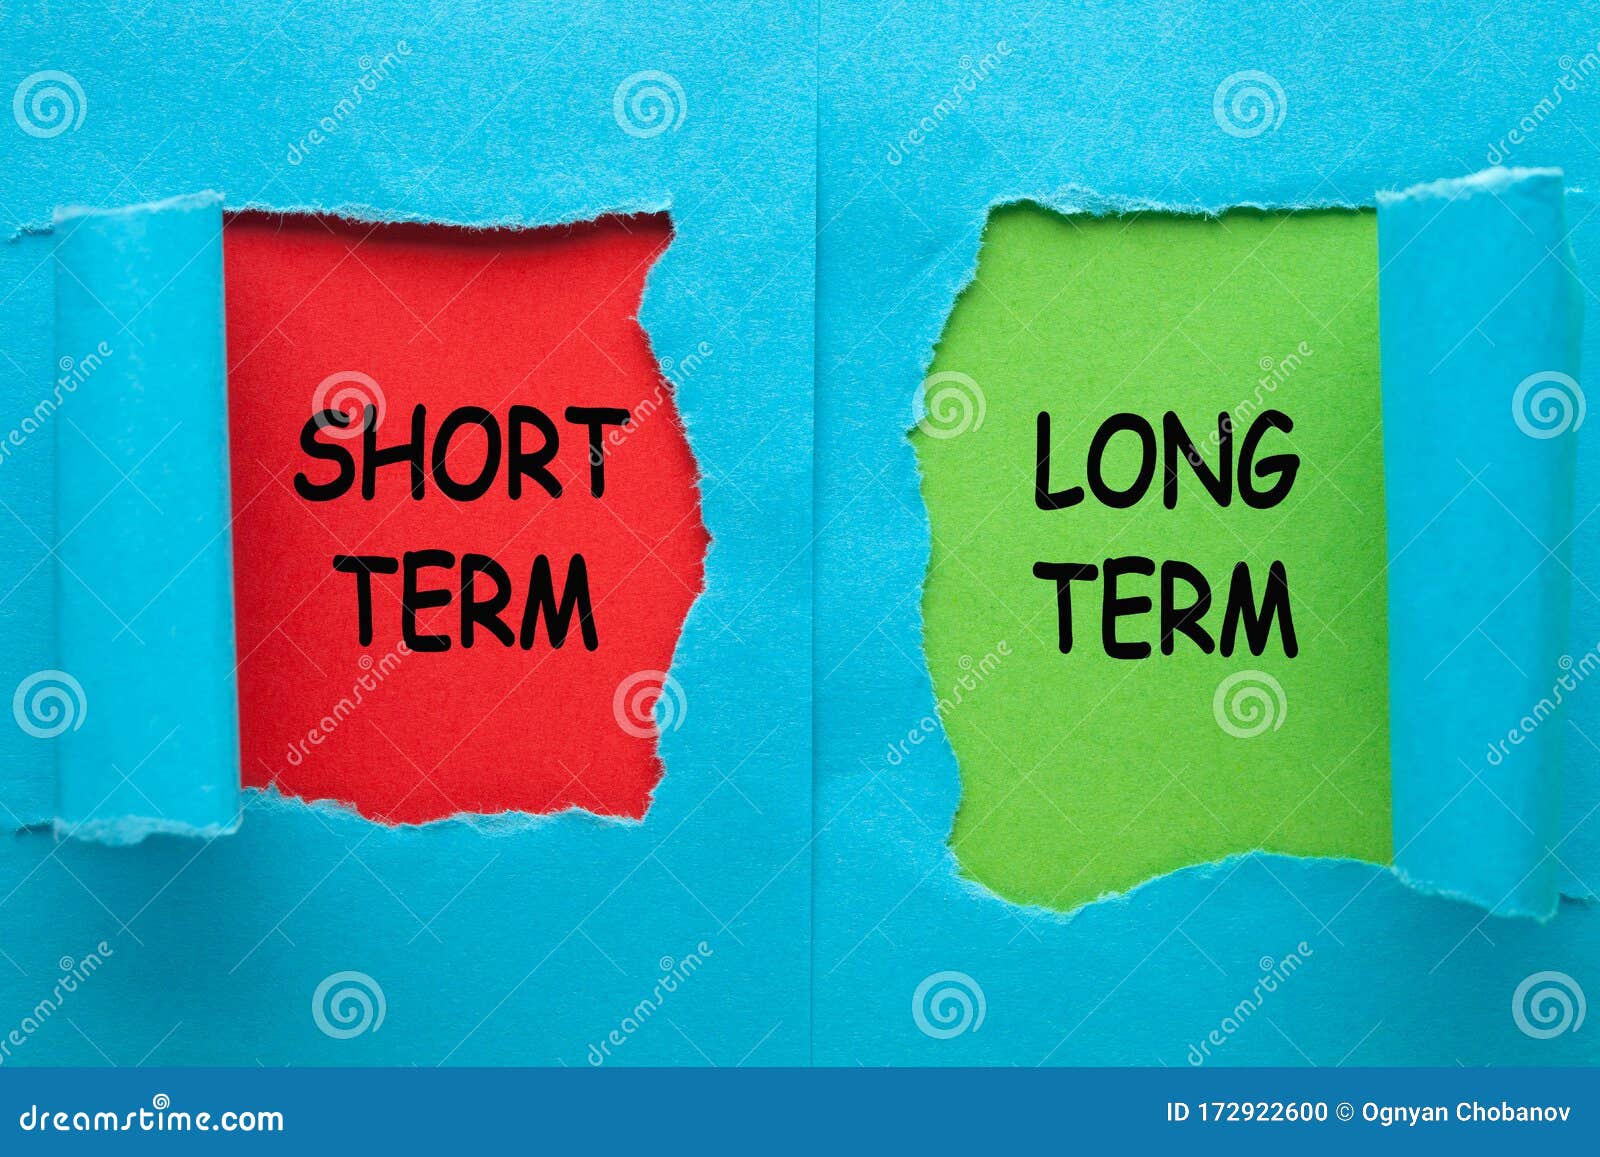 long or short term